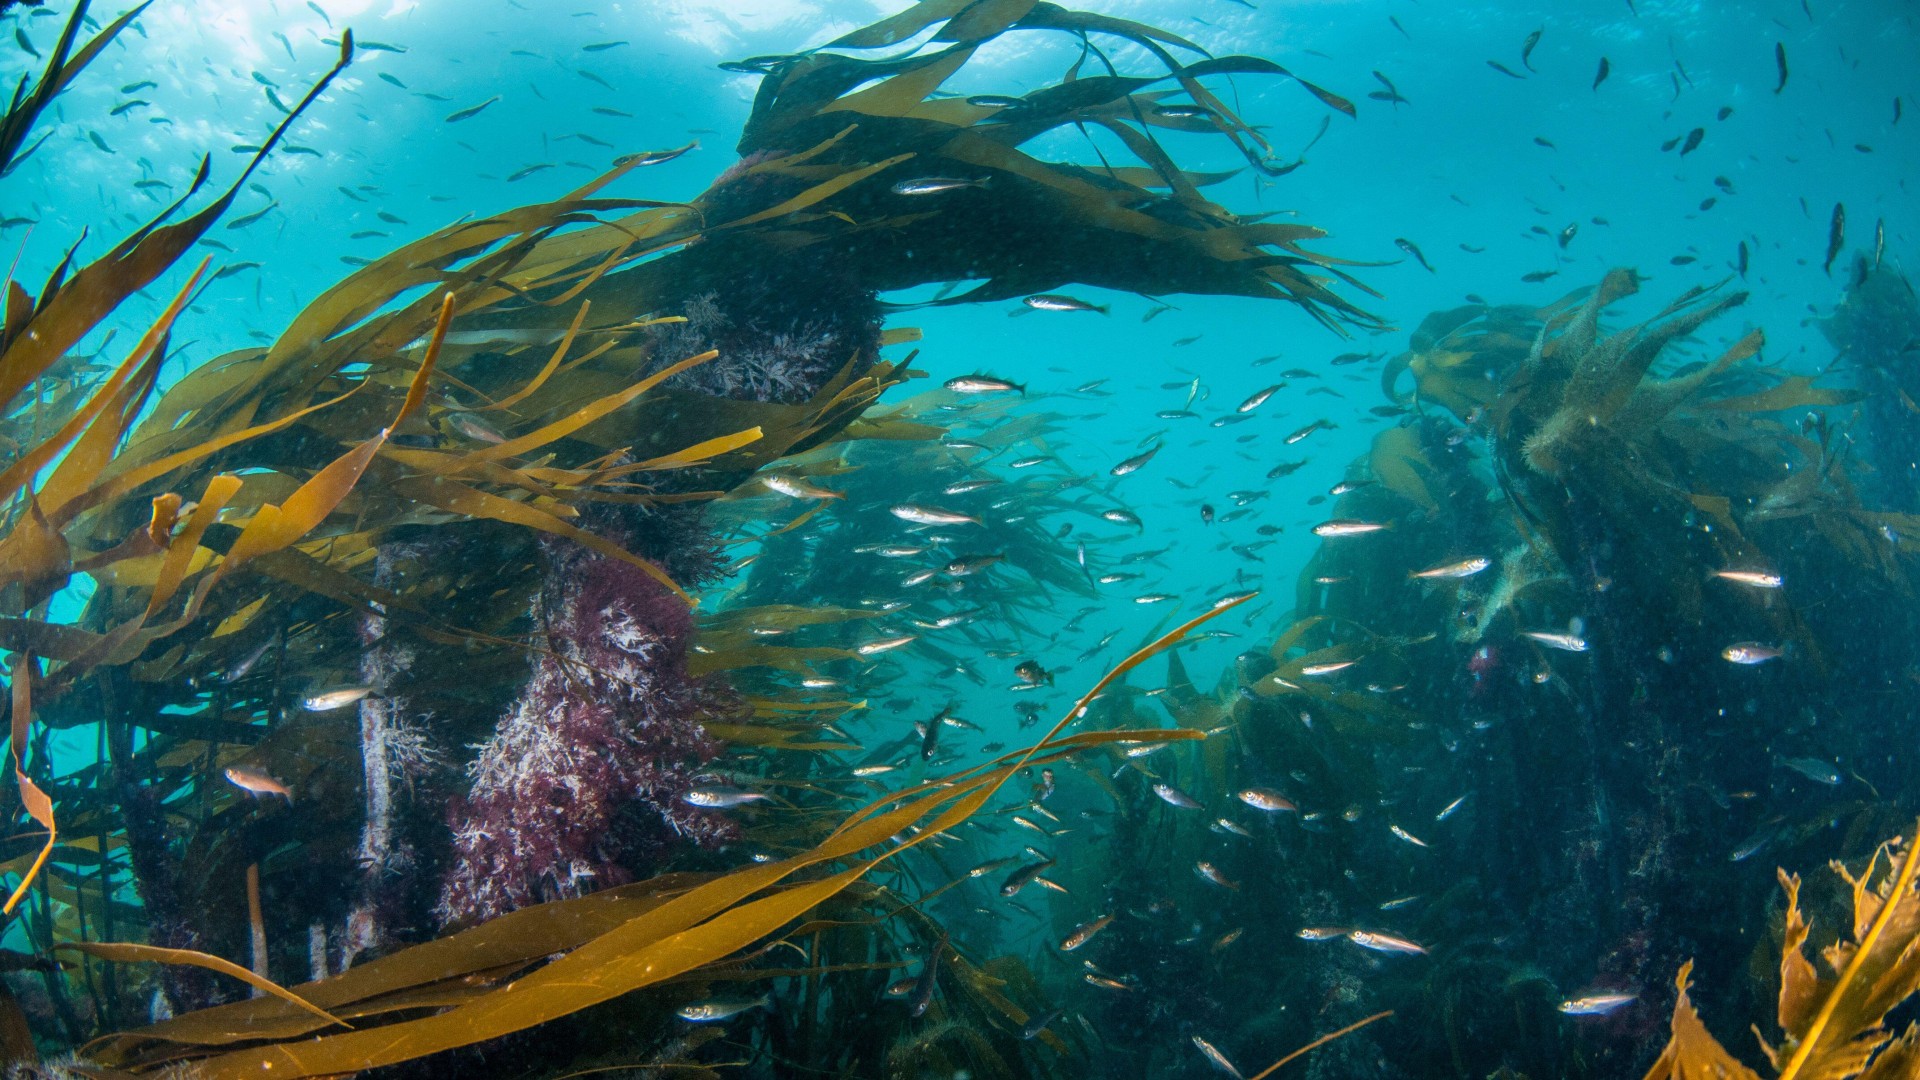 Kelp forest (Laminaria digitata) with small fish, Shetland, Scotland, UK.